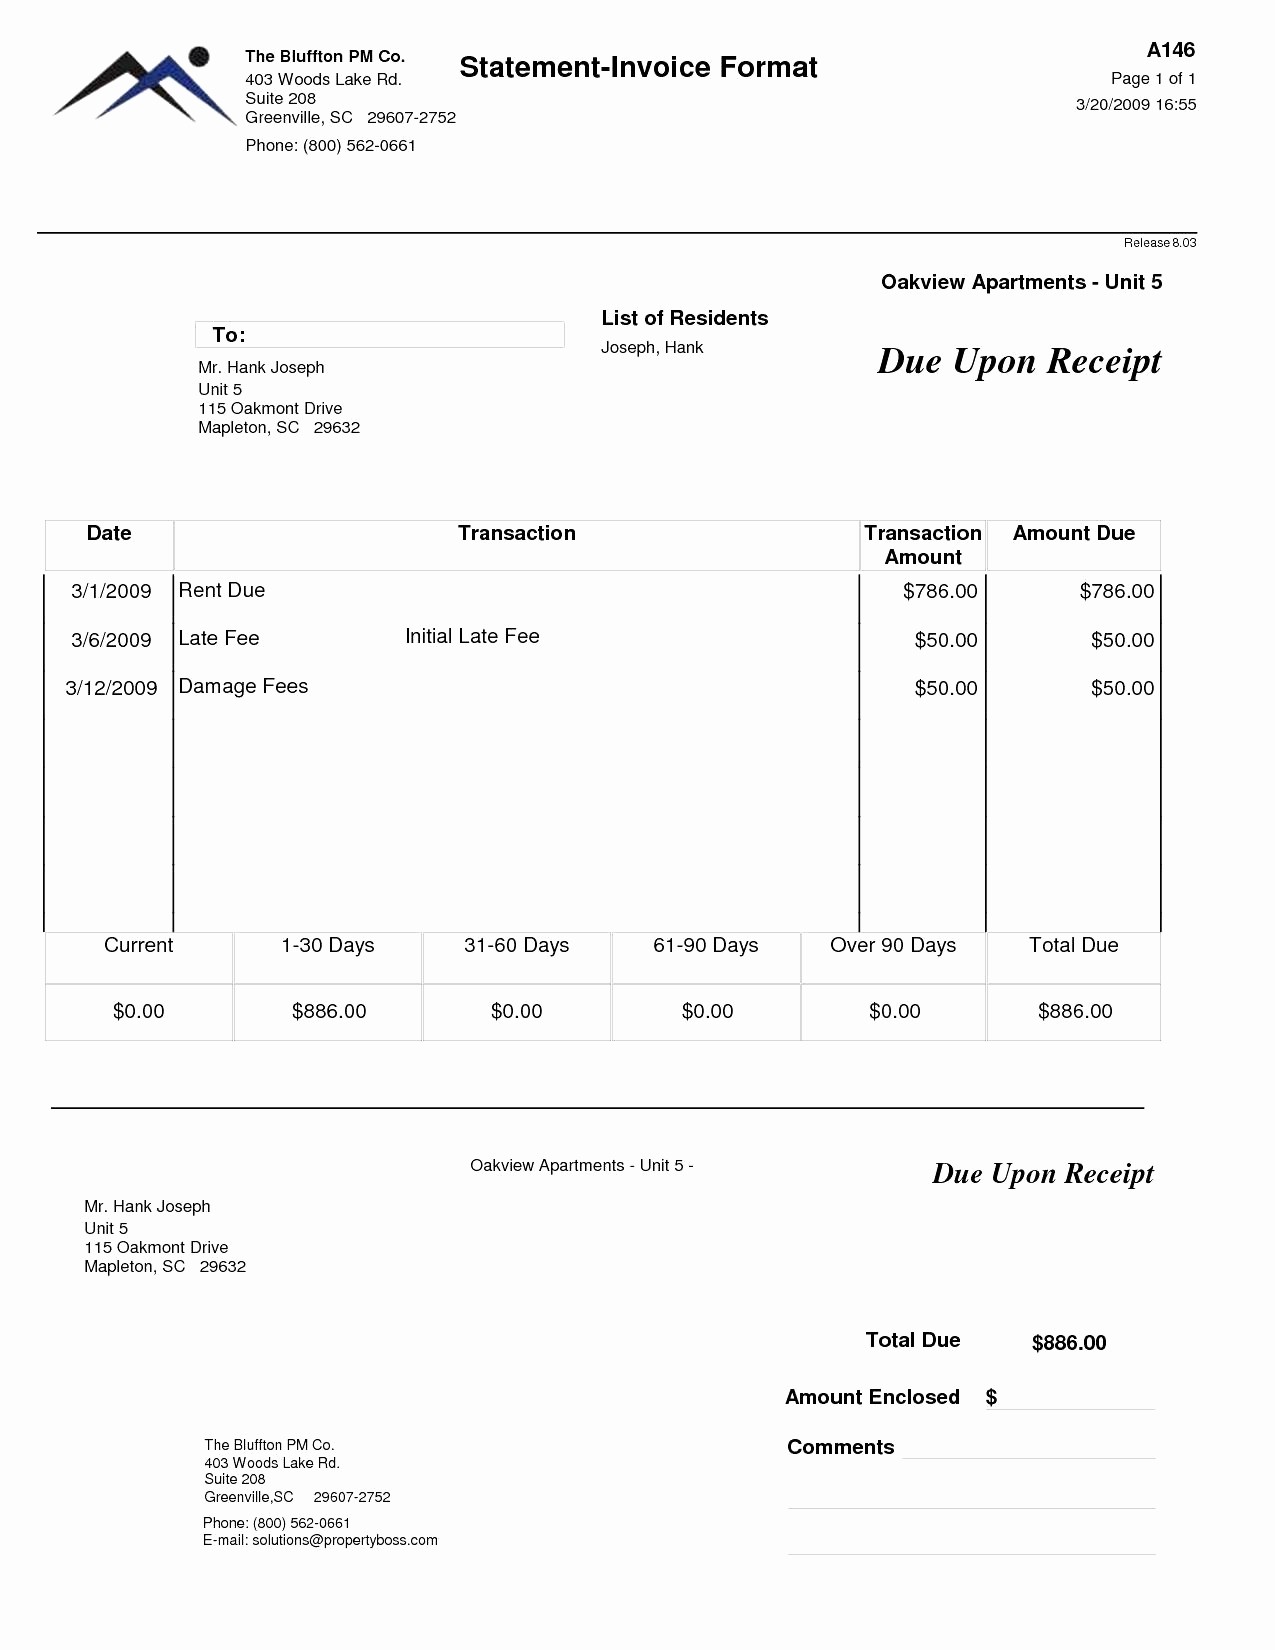 Car Insurance Cards Printable Unique Document Fake